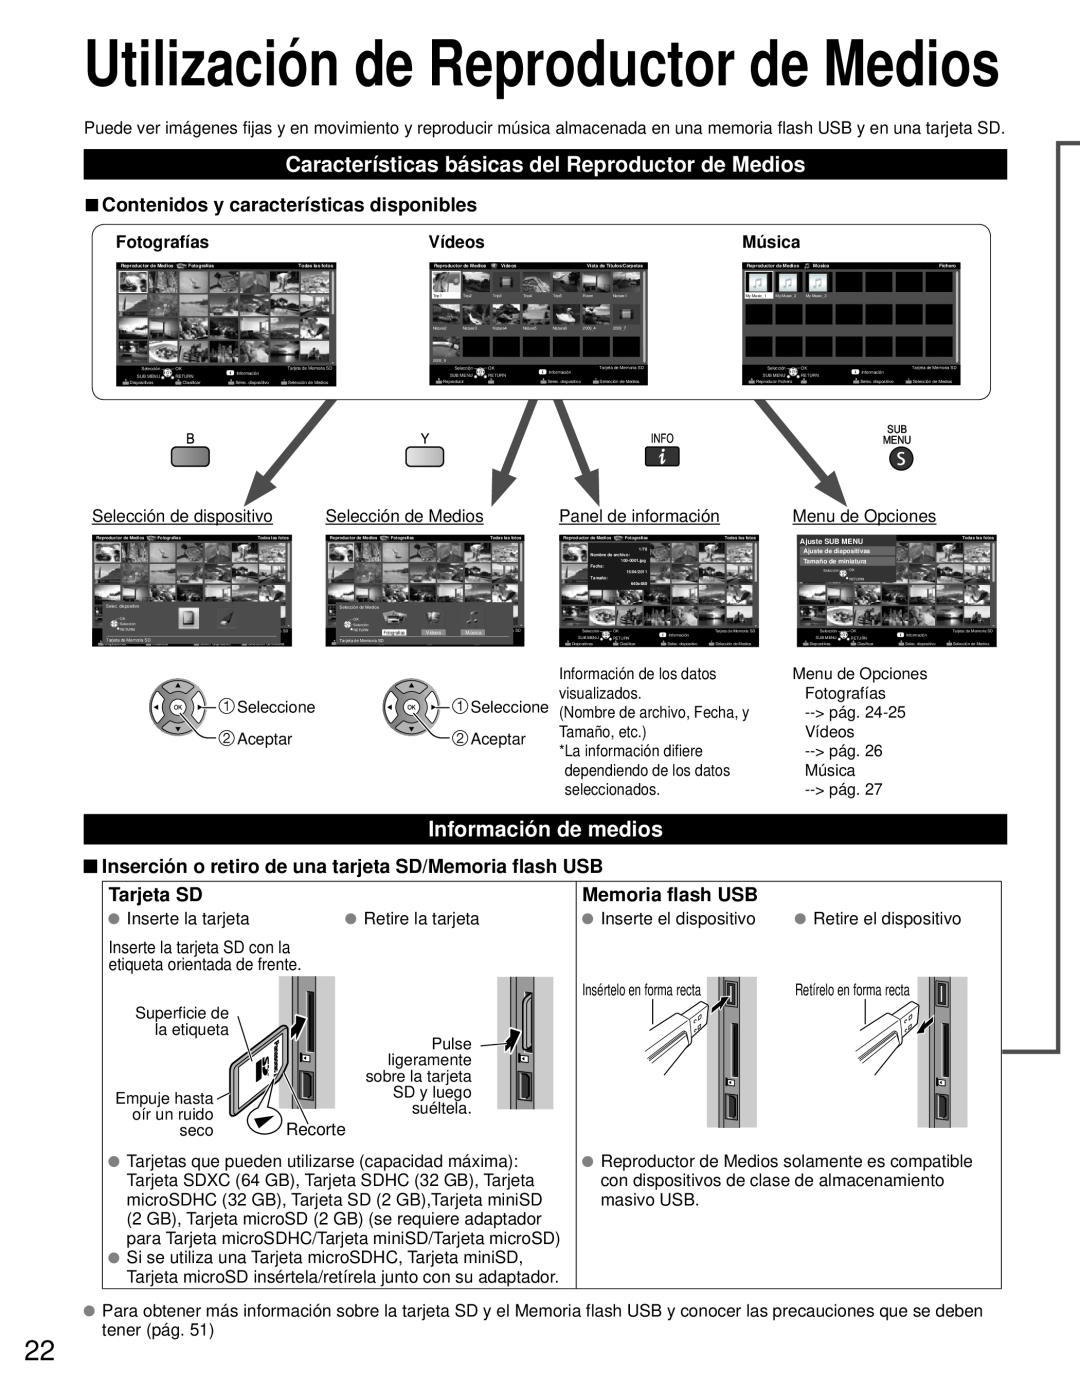 Panasonic TC-L42E3 Características básicas del Reproductor de Medios, Información de medios, Tarjeta SD, Memoria flash USB 